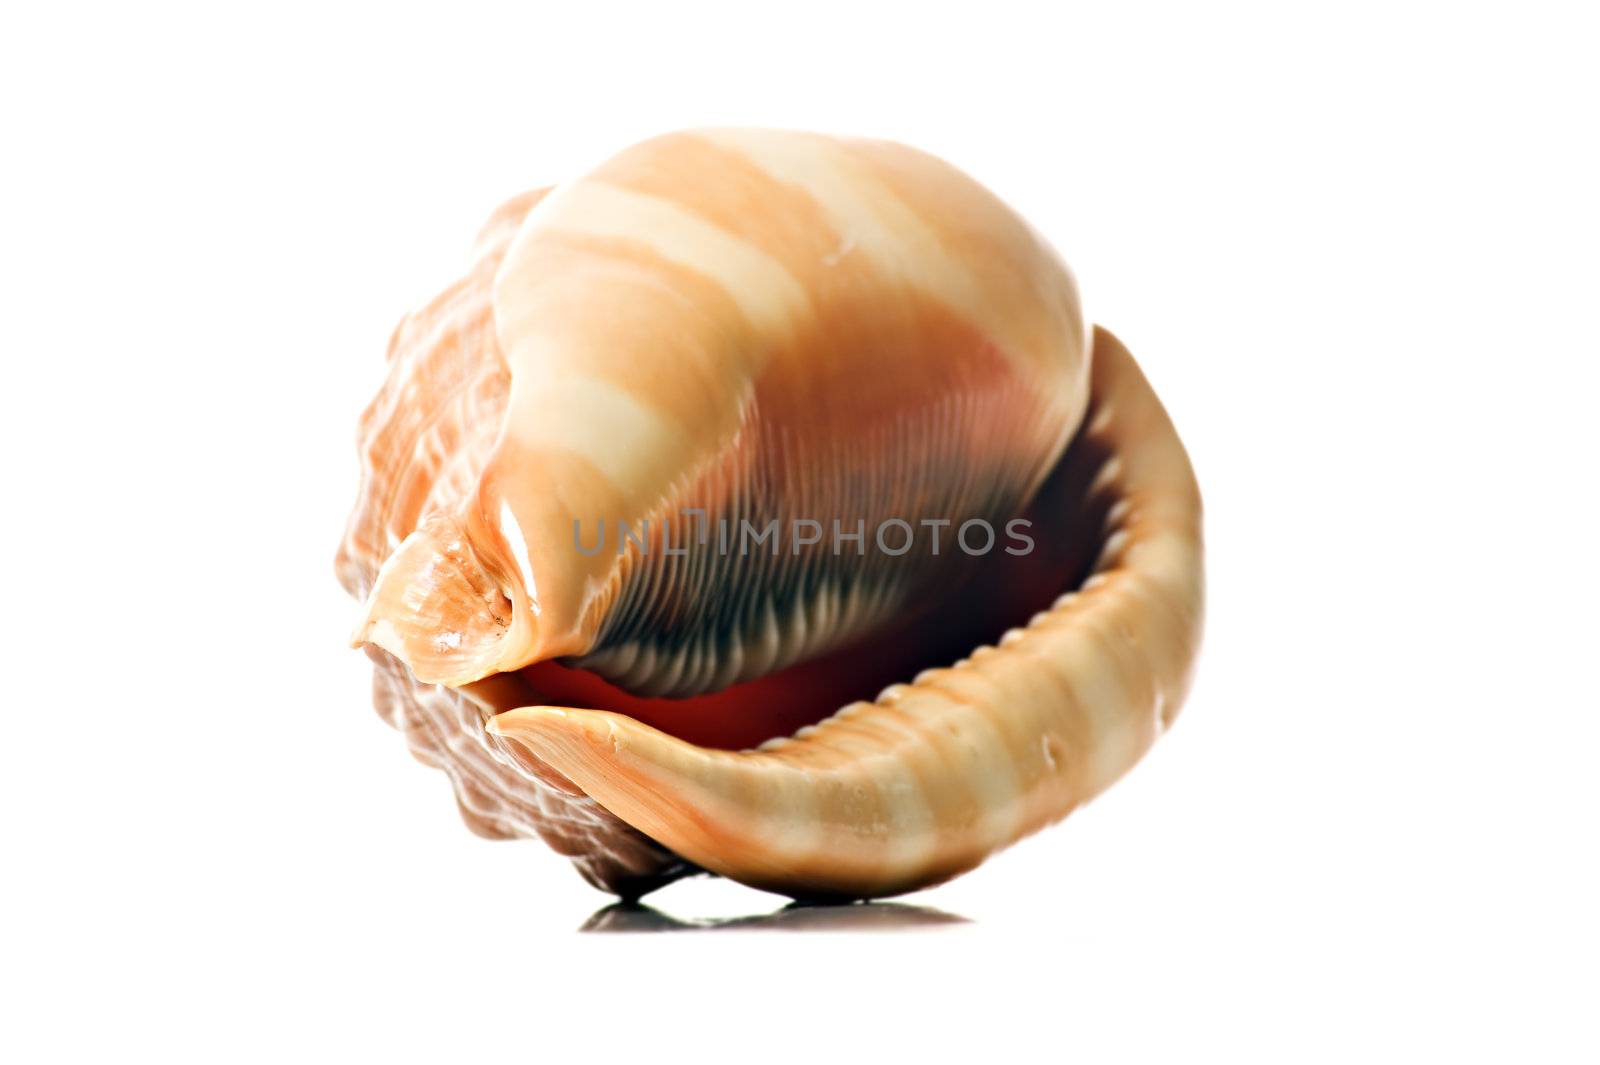 Perfect beautiful sea shell on white background